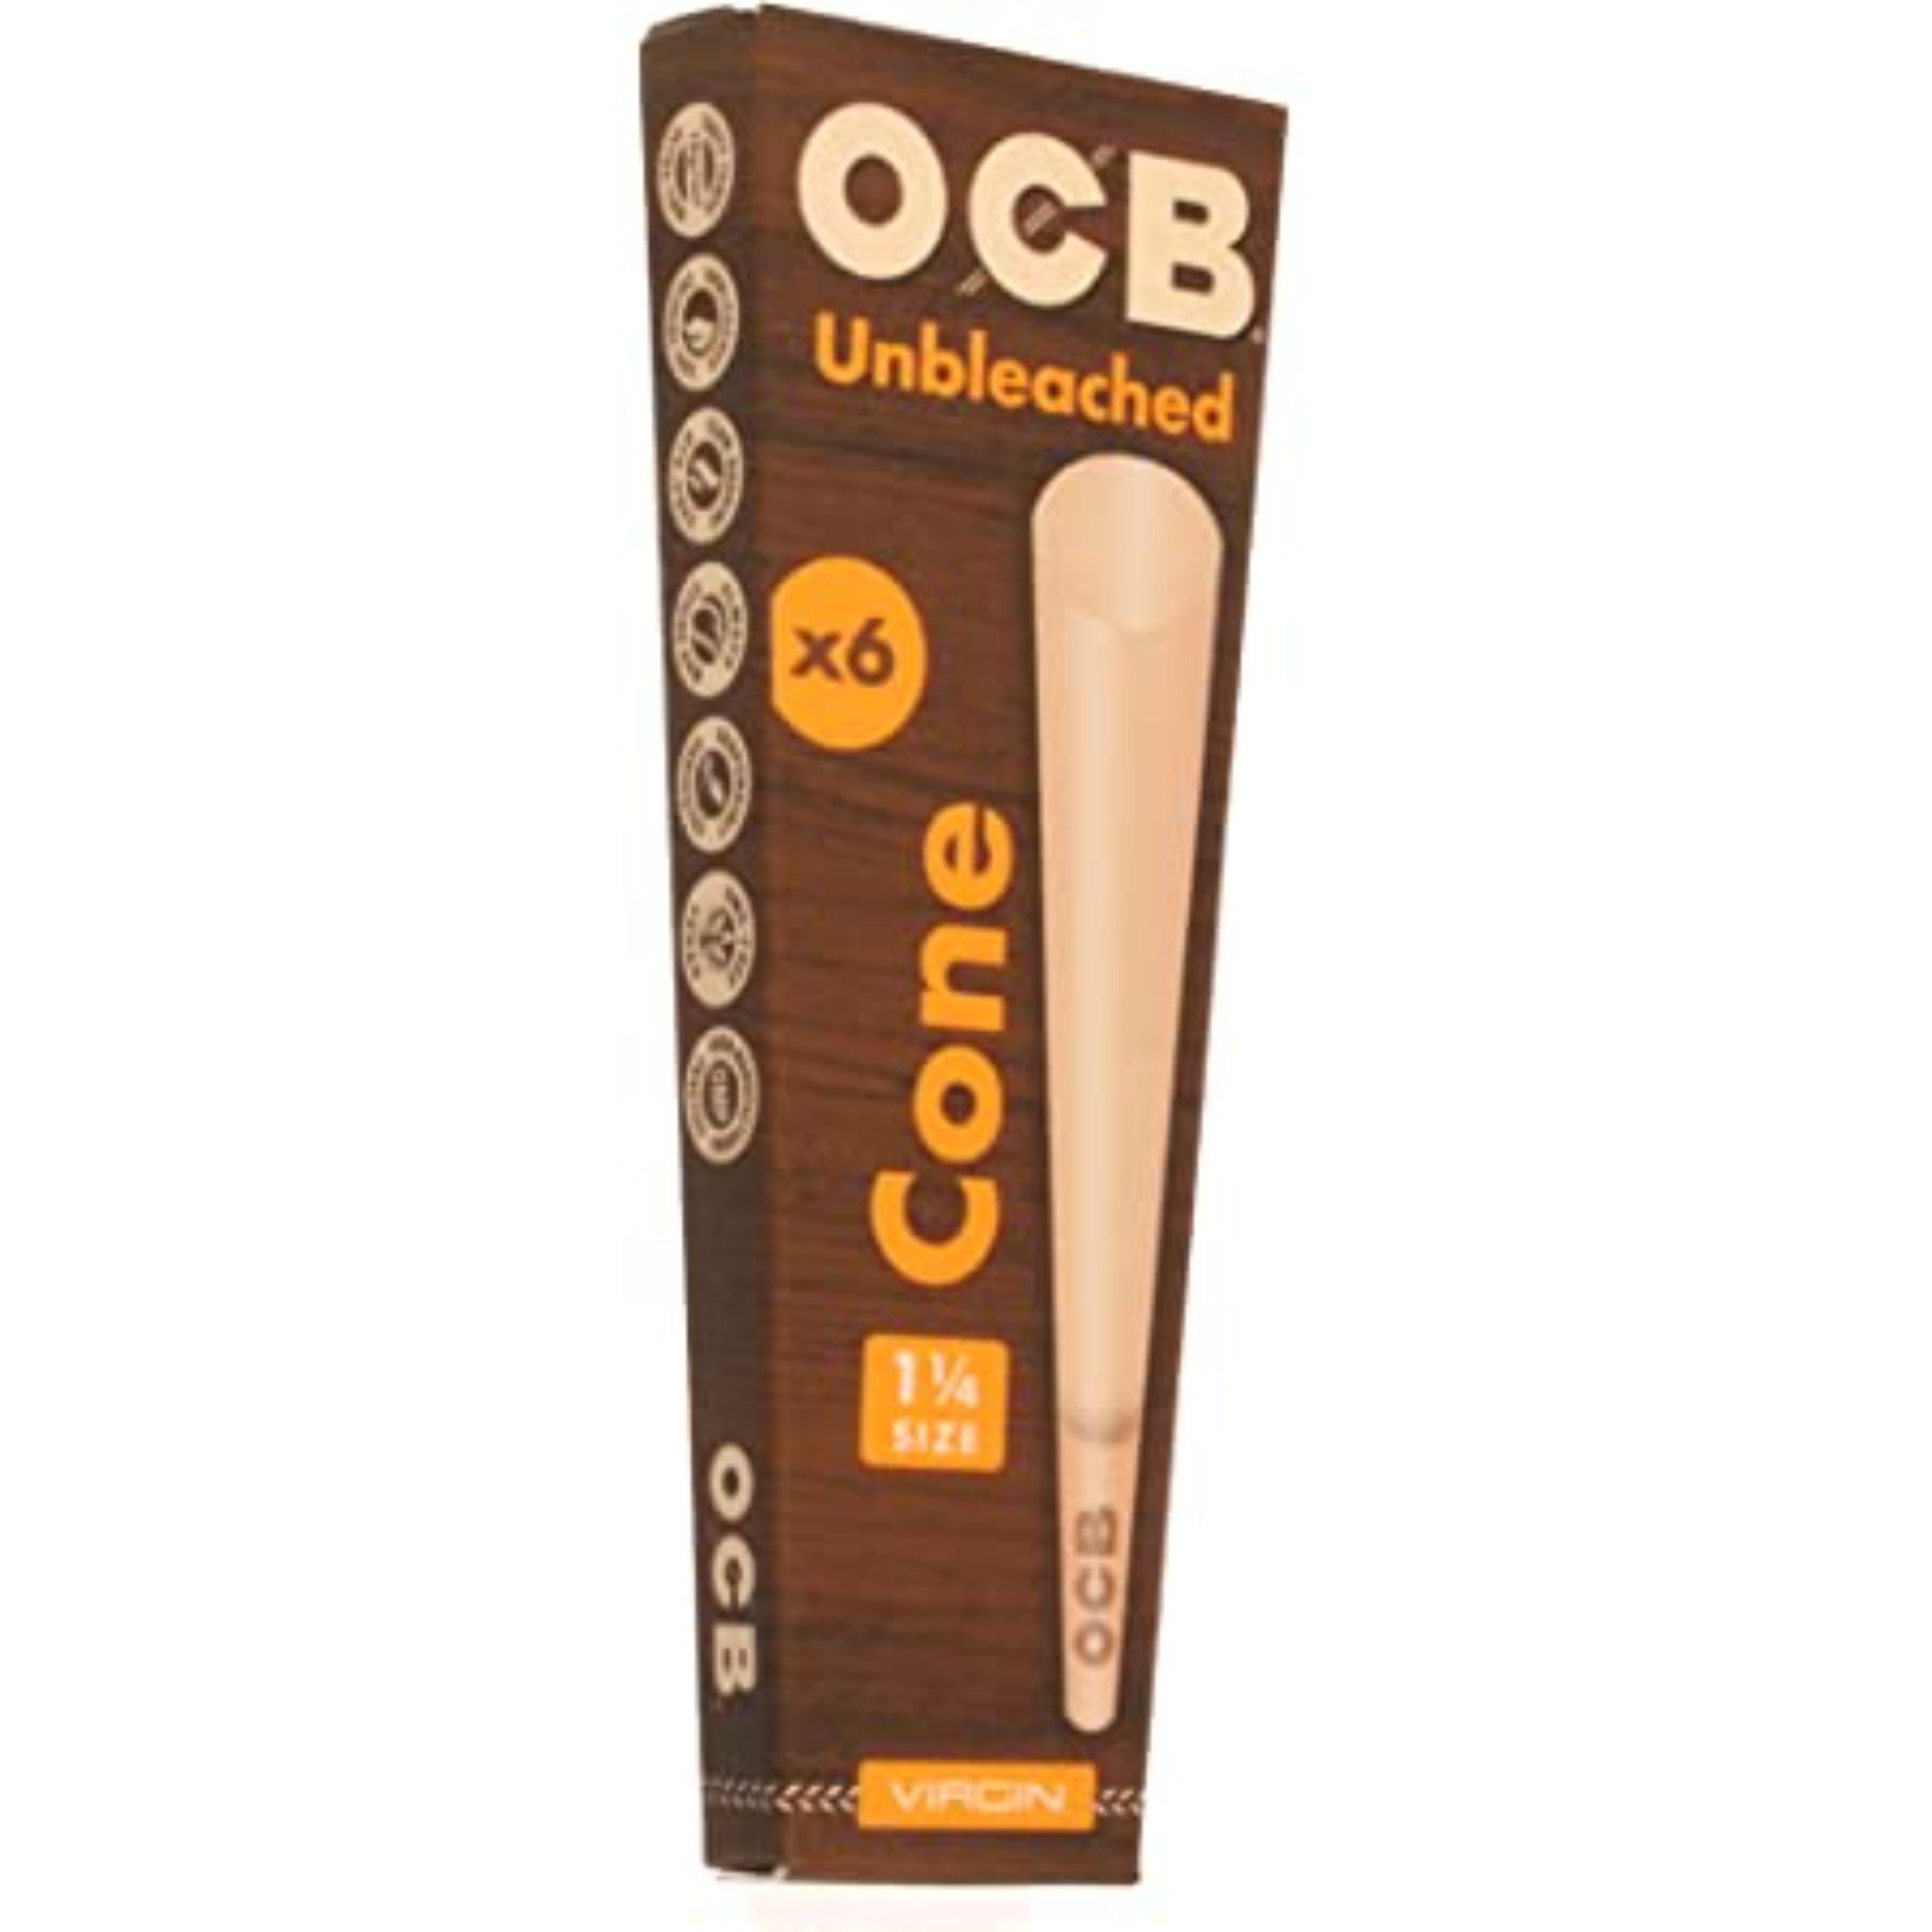 OCB Virgin Cones Cone OCB 1 1/4 (6 Pack) 